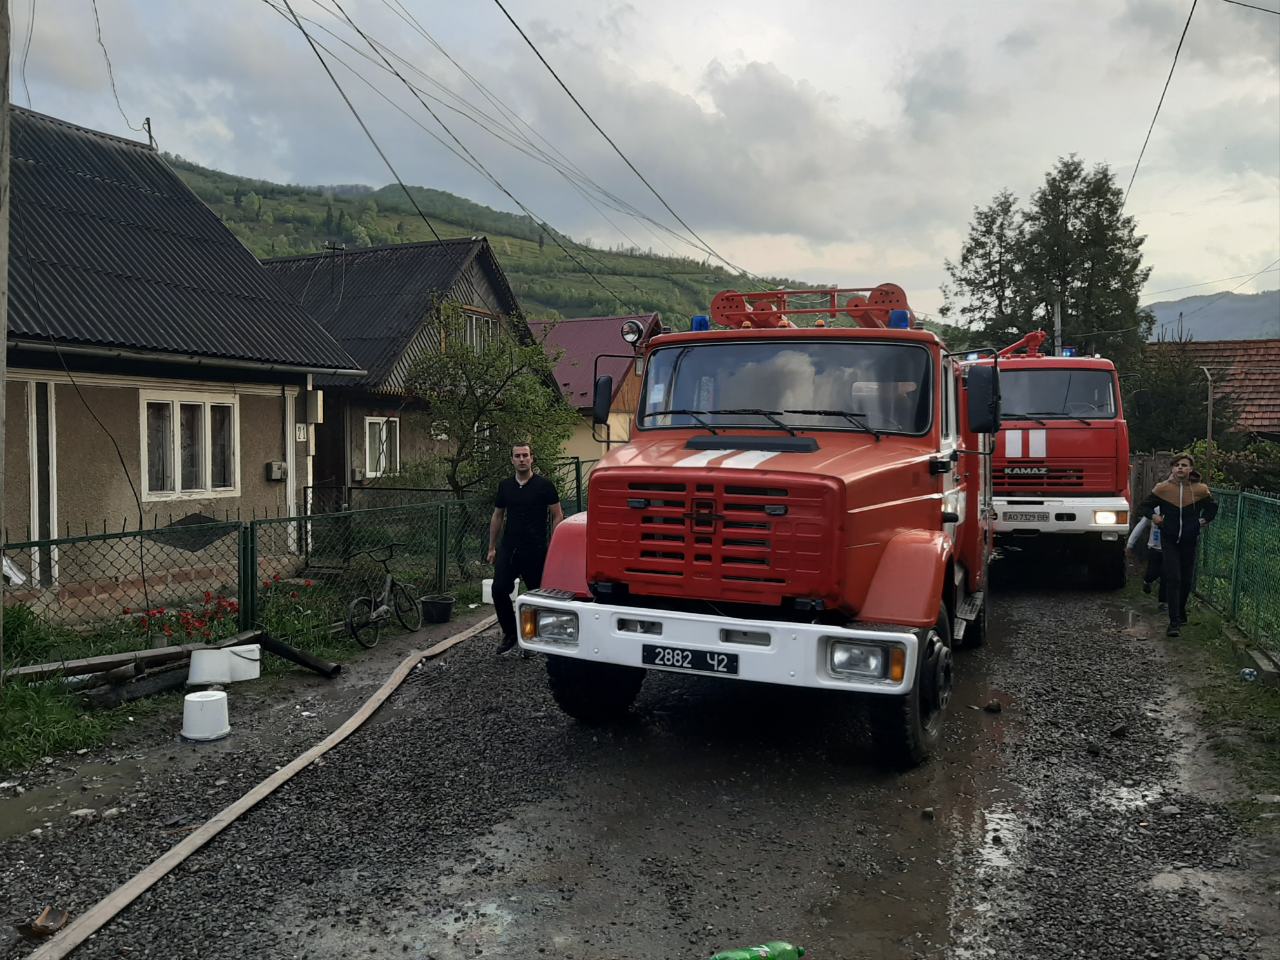 В Закарпатье масштабный пожар разрушил сразу два дома 